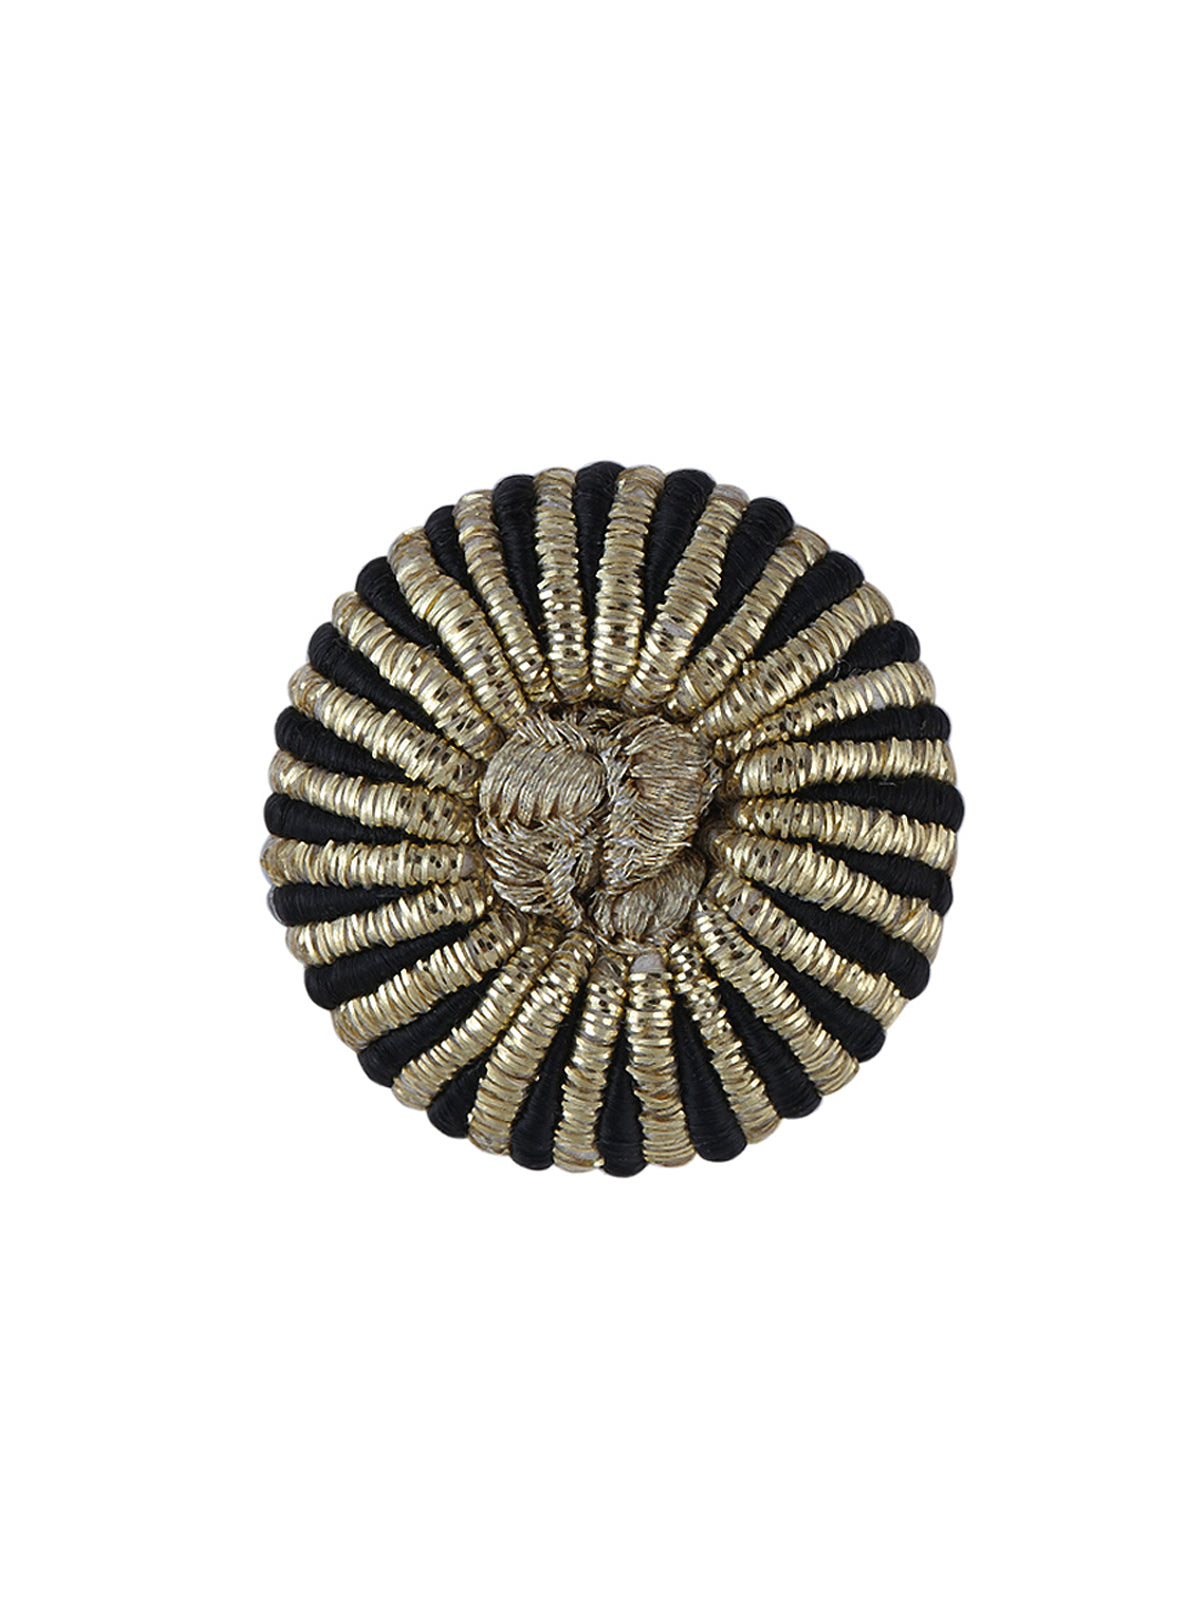 Decorative Metallic Gold & Black Fancy Cord Button